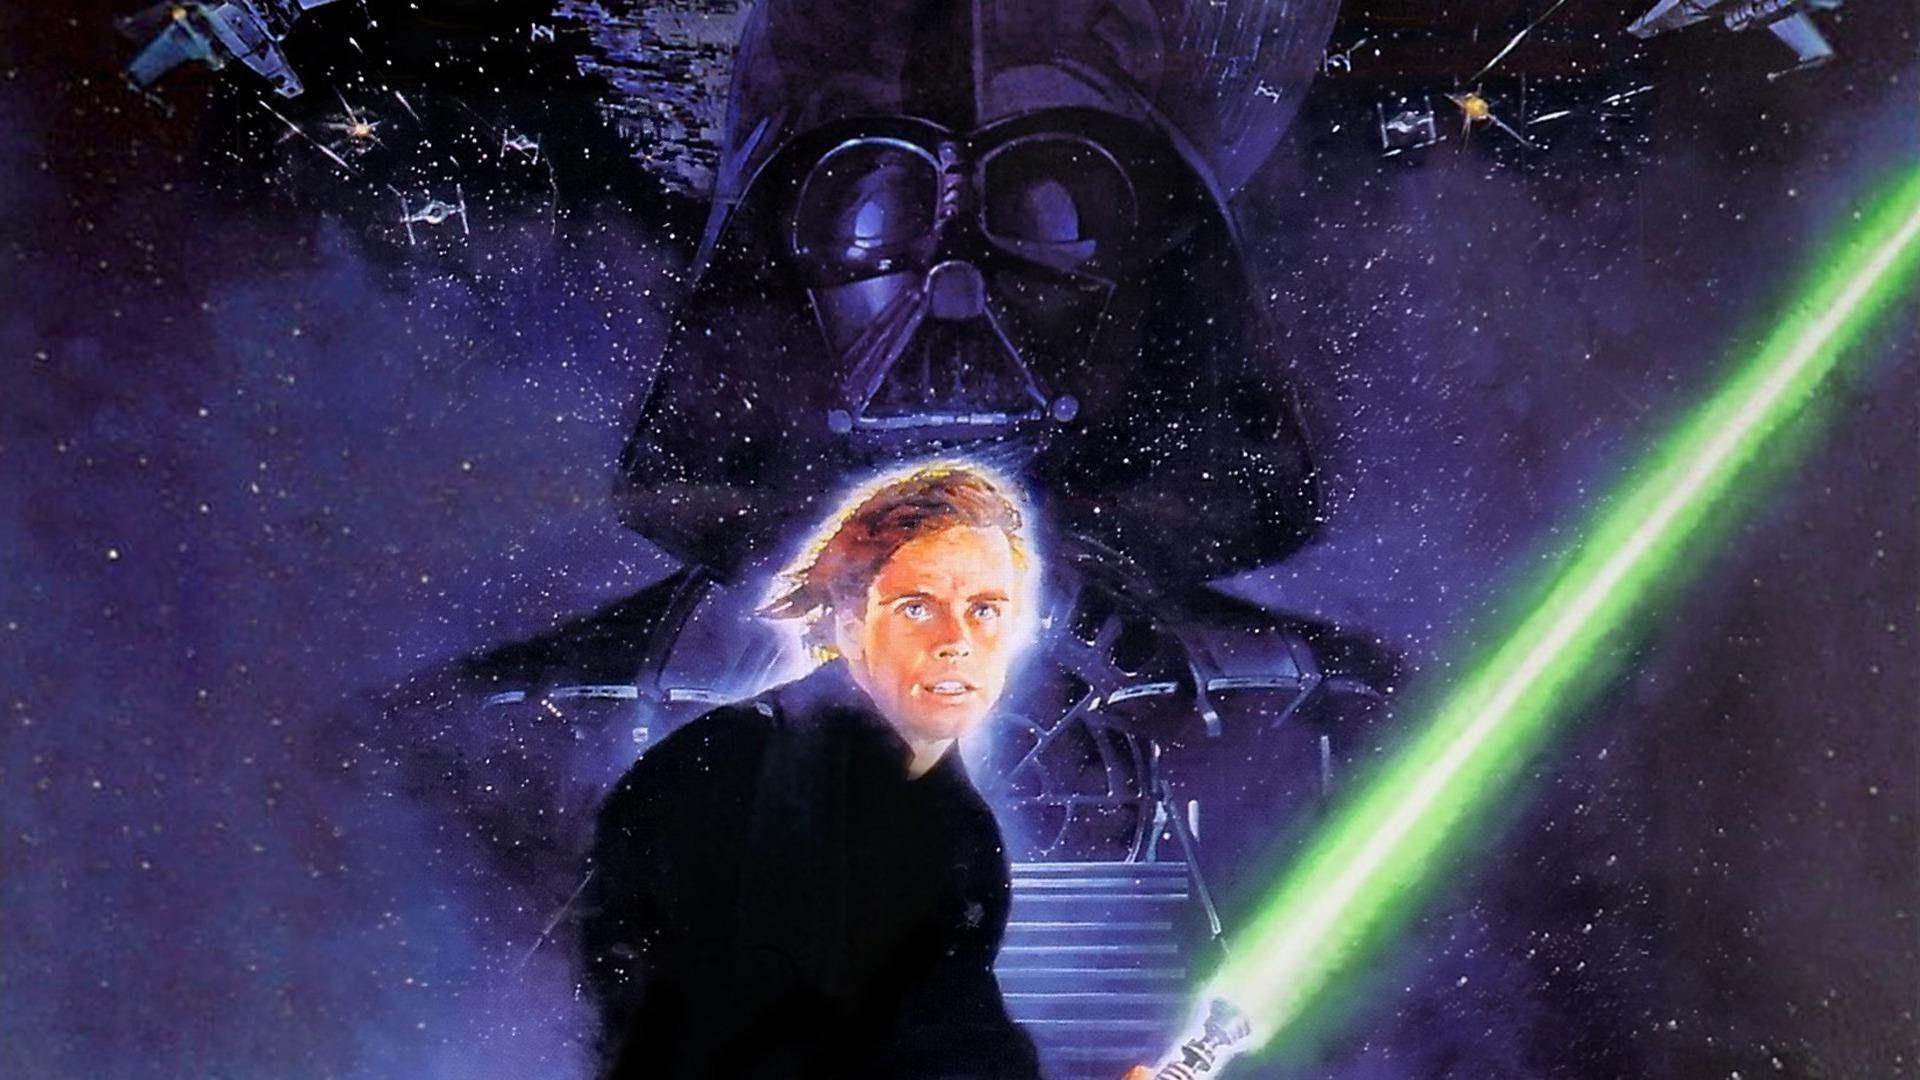 Star Wars Luke Skywalker Wallpapers Top Free Star Wars Luke Skywalker Backgrounds Wallpaperaccess